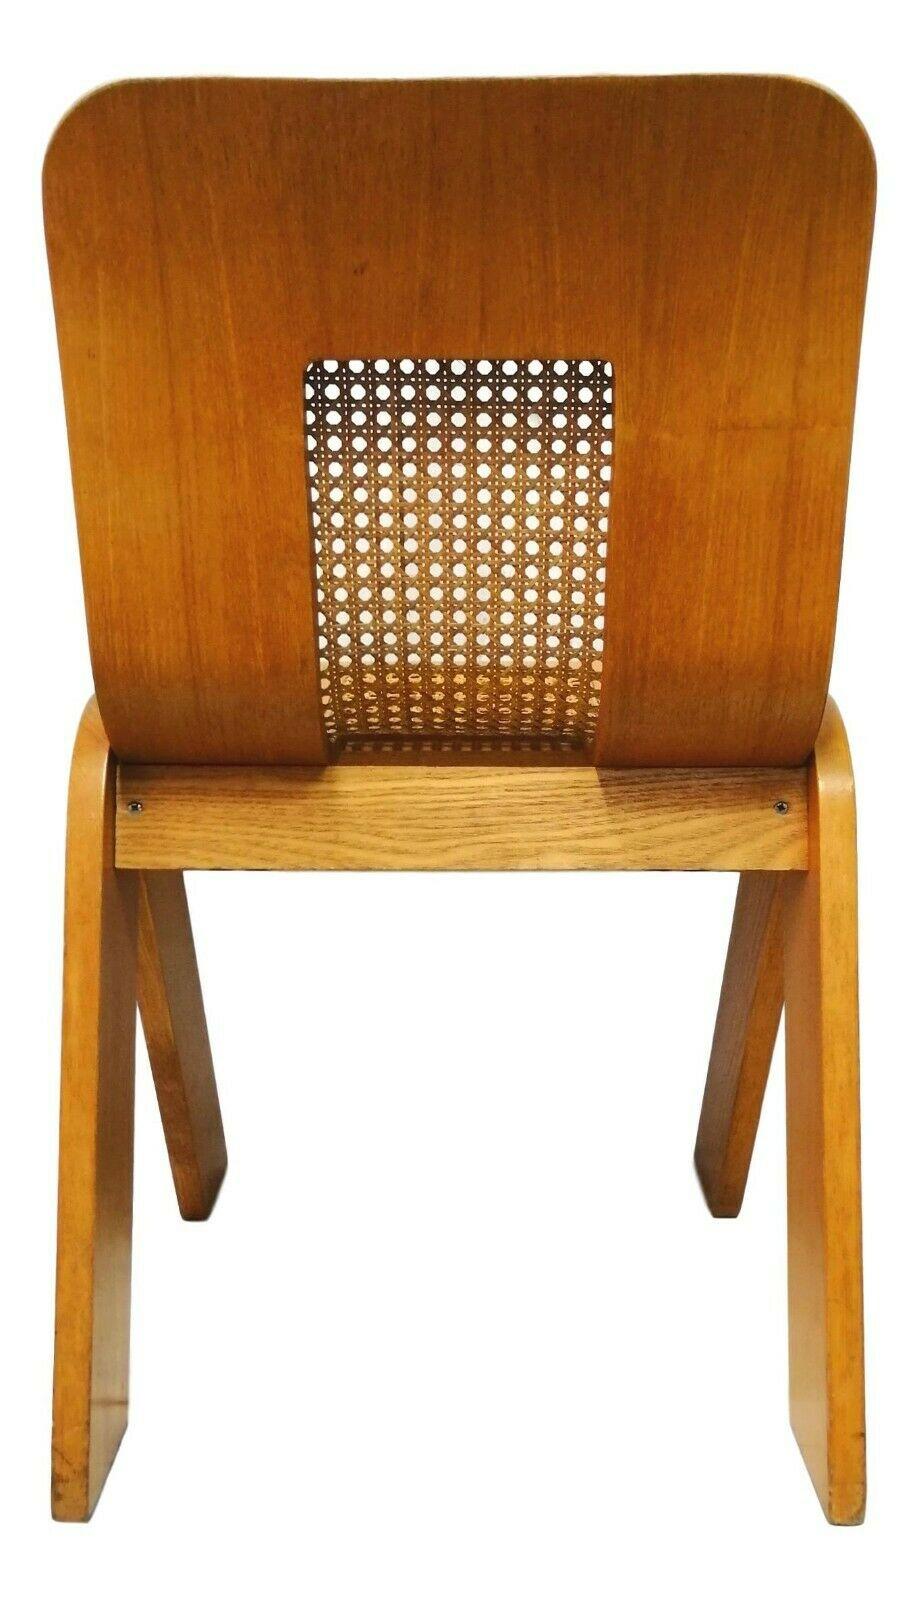 Italian Plywood Curved Chair Design Gigi Sabadin for Stilwood, 1970s